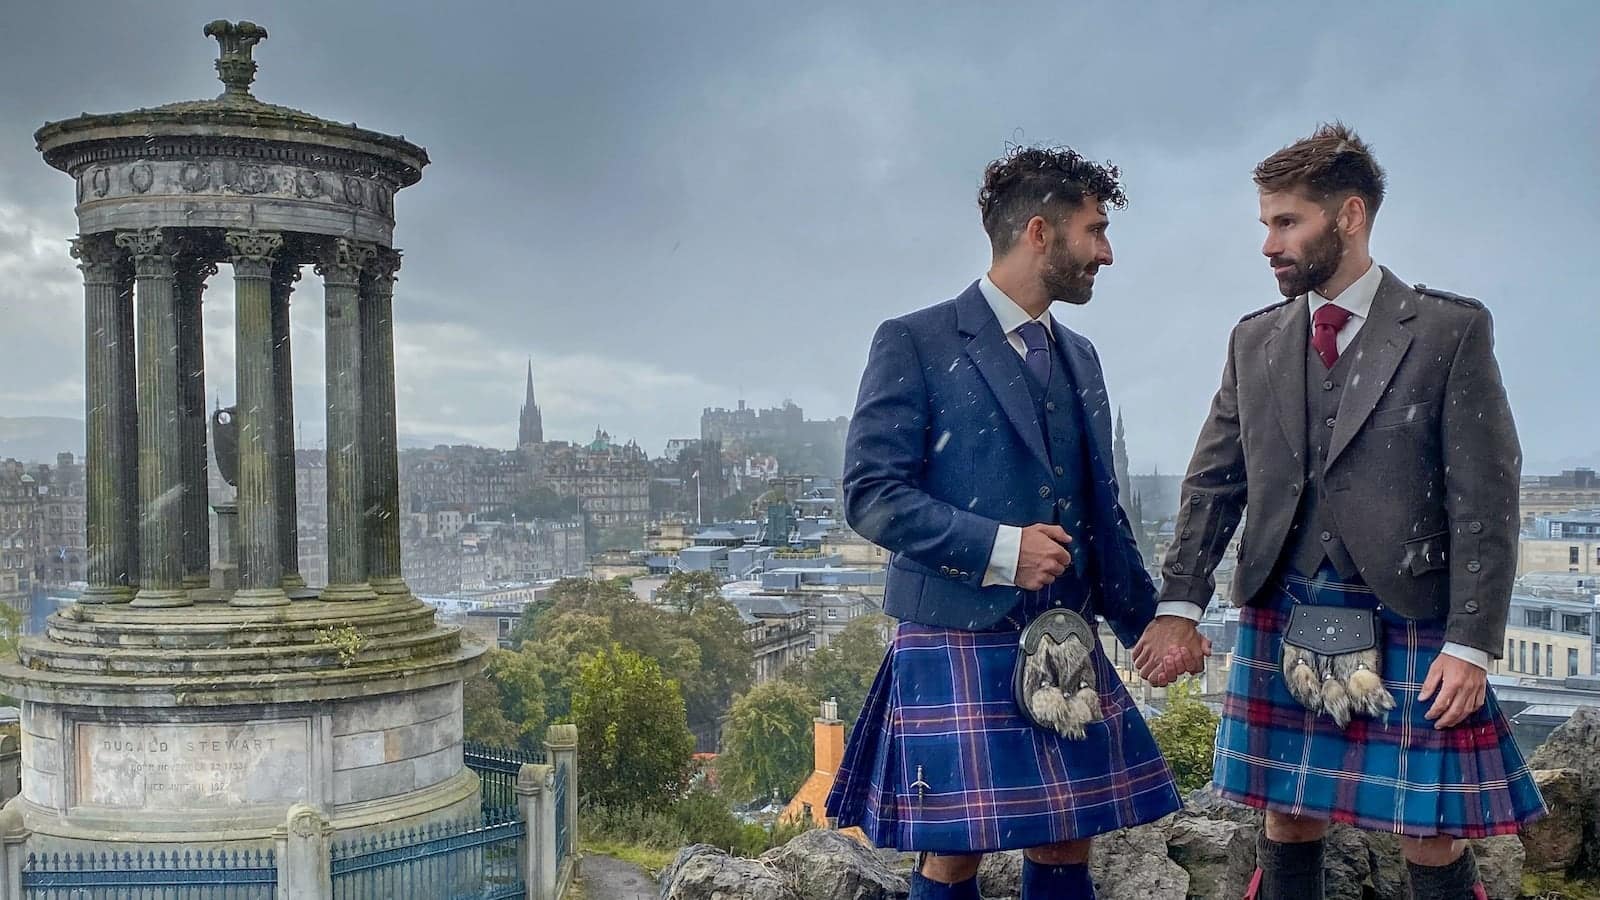 Gay couple in kilts holding hands at Carlton Hill in Edinburgh, Scotland.